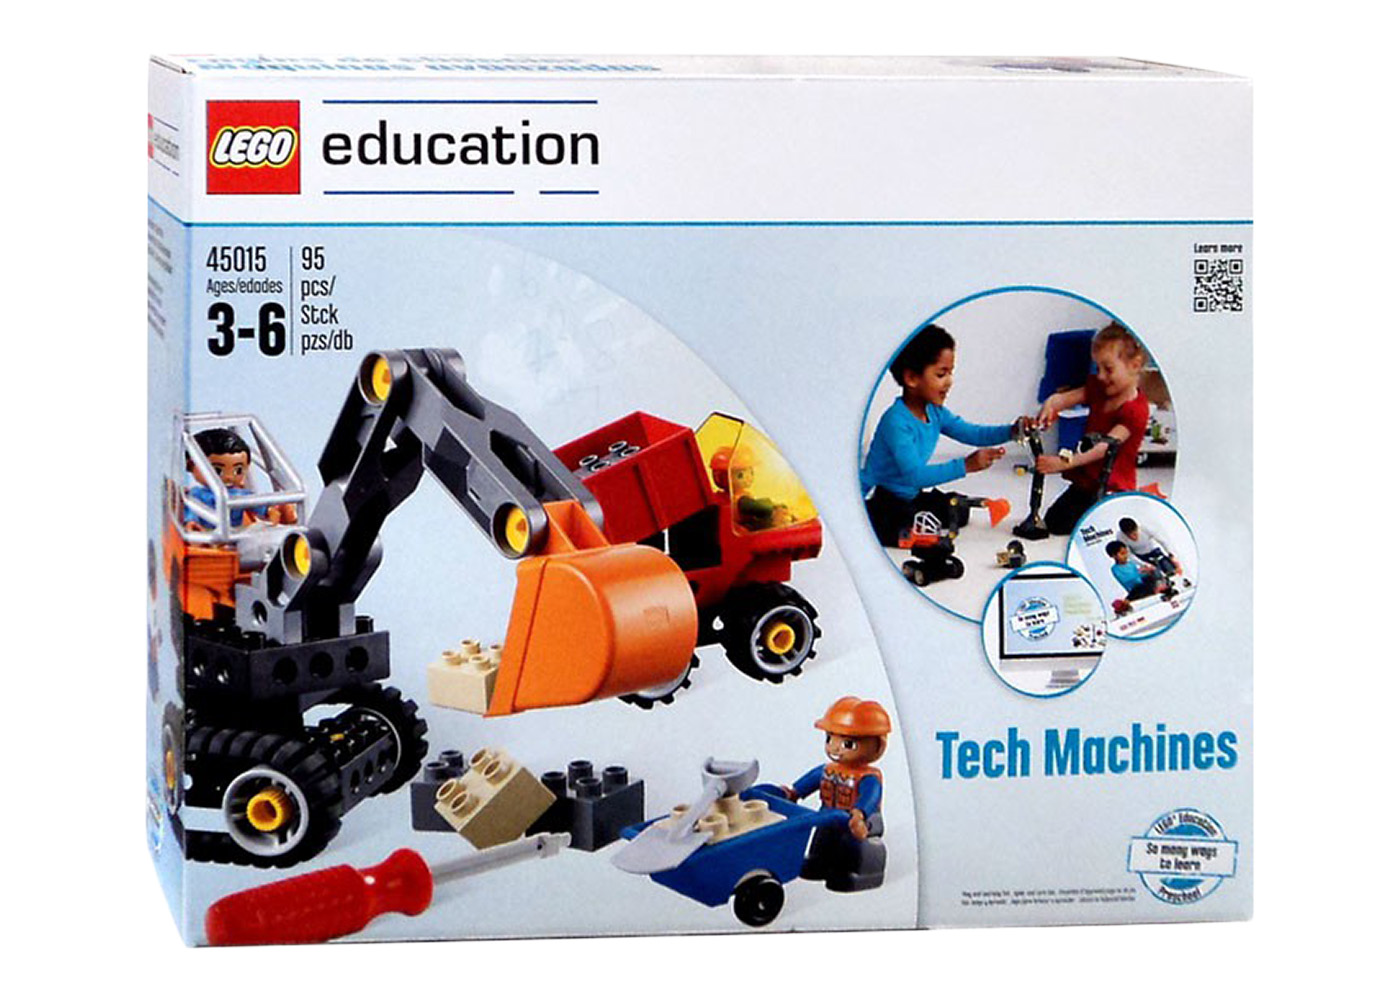 LEGO Education Pneumatics Add-On Set 9641 - US